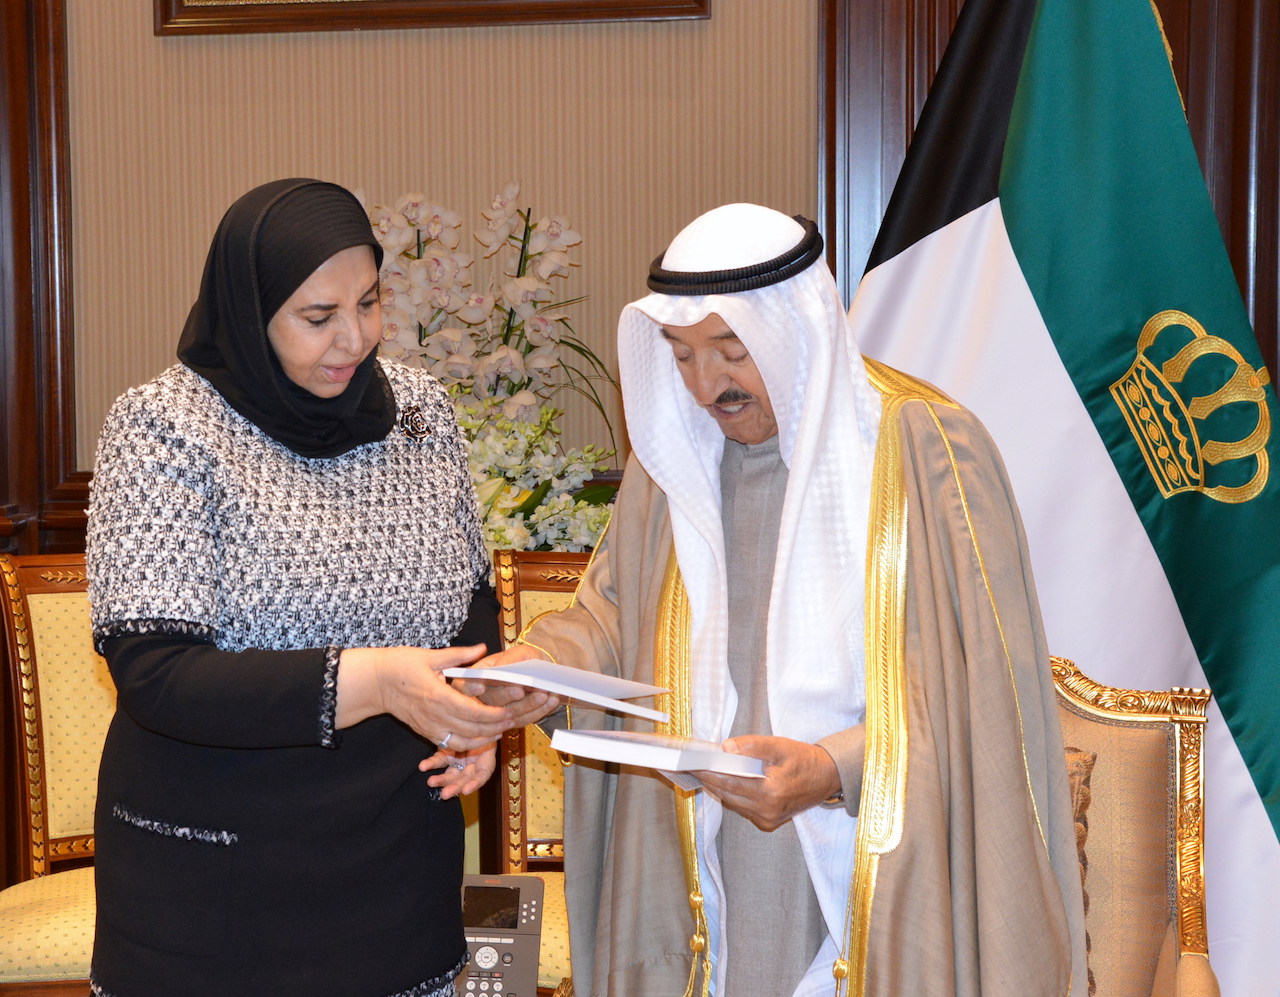 His Highness the Amir Sheikh Sabah Al-Ahmad Al-Jaber Al-Sabah receives Sheikha Dr. Suad